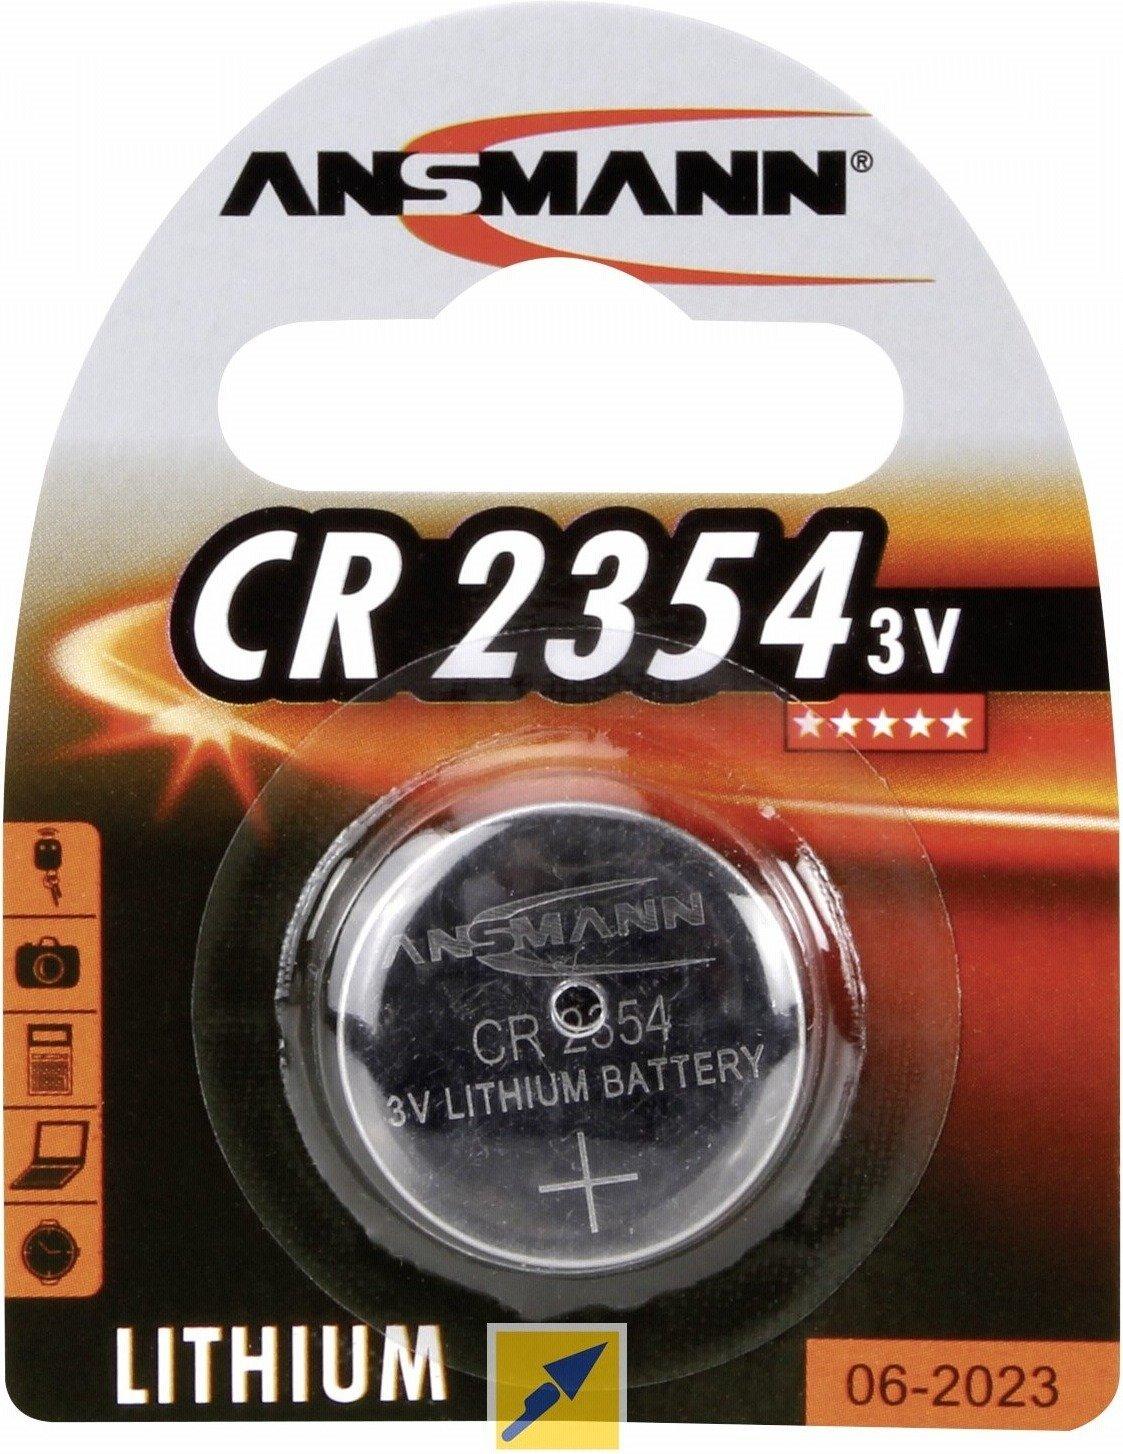 Ansmann CR1620 3V Lithium Battery 5020072 B&H Photo Video